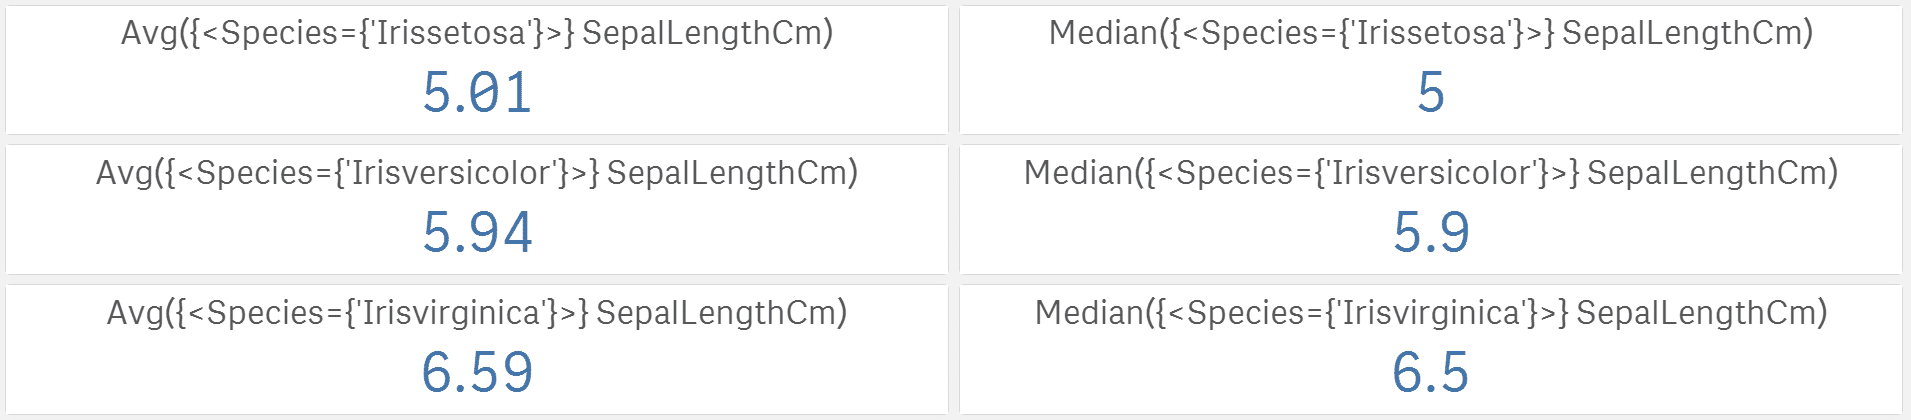 Averages and medians